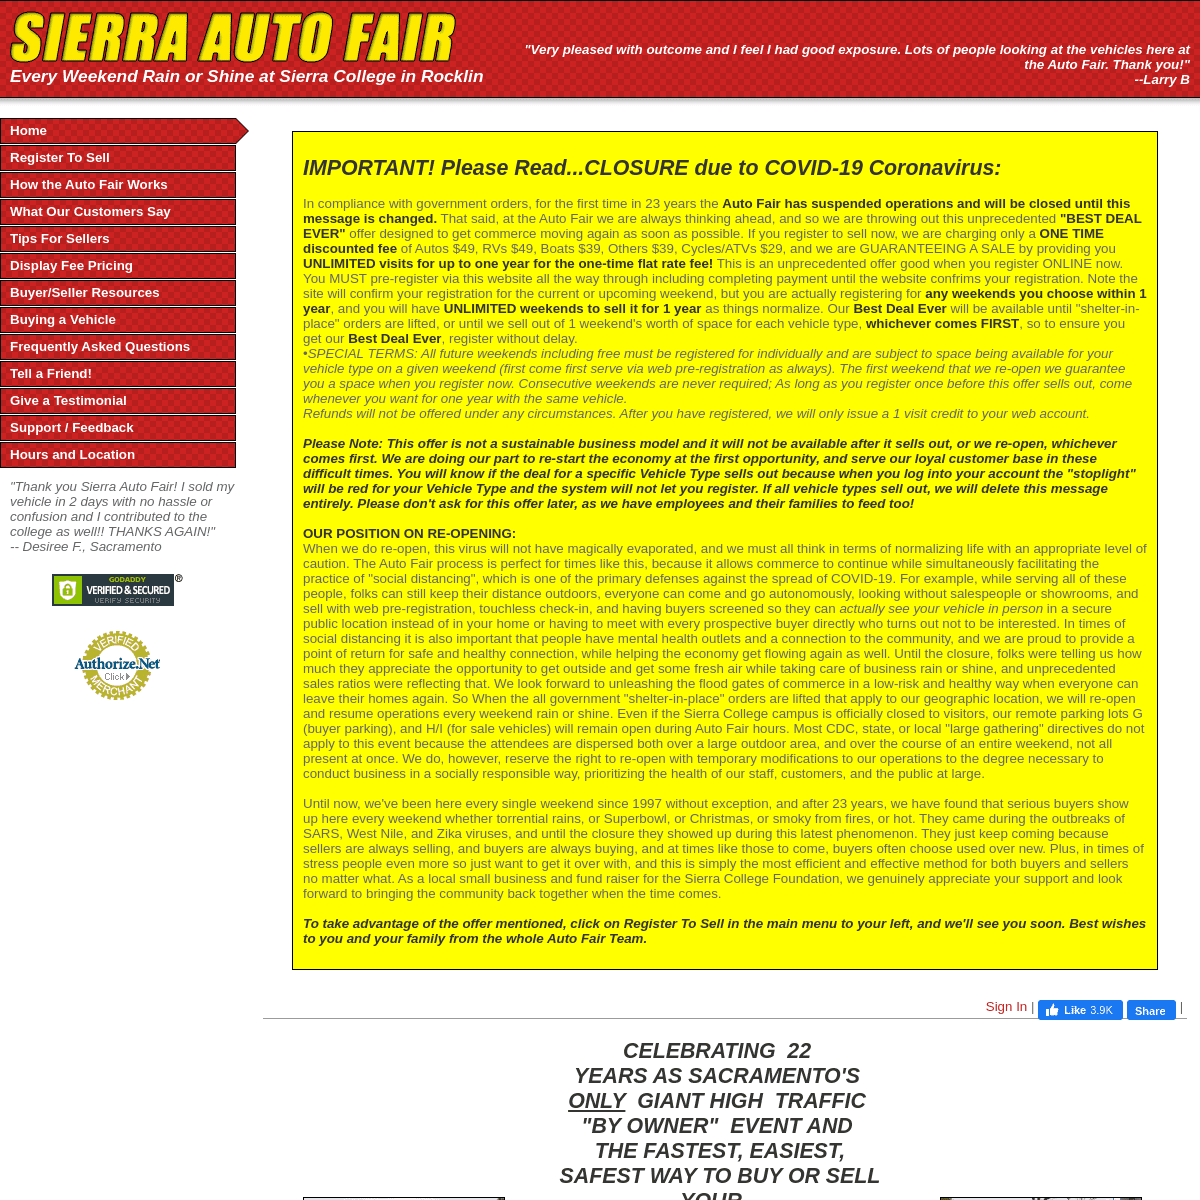 A complete backup of sierraautofair.com